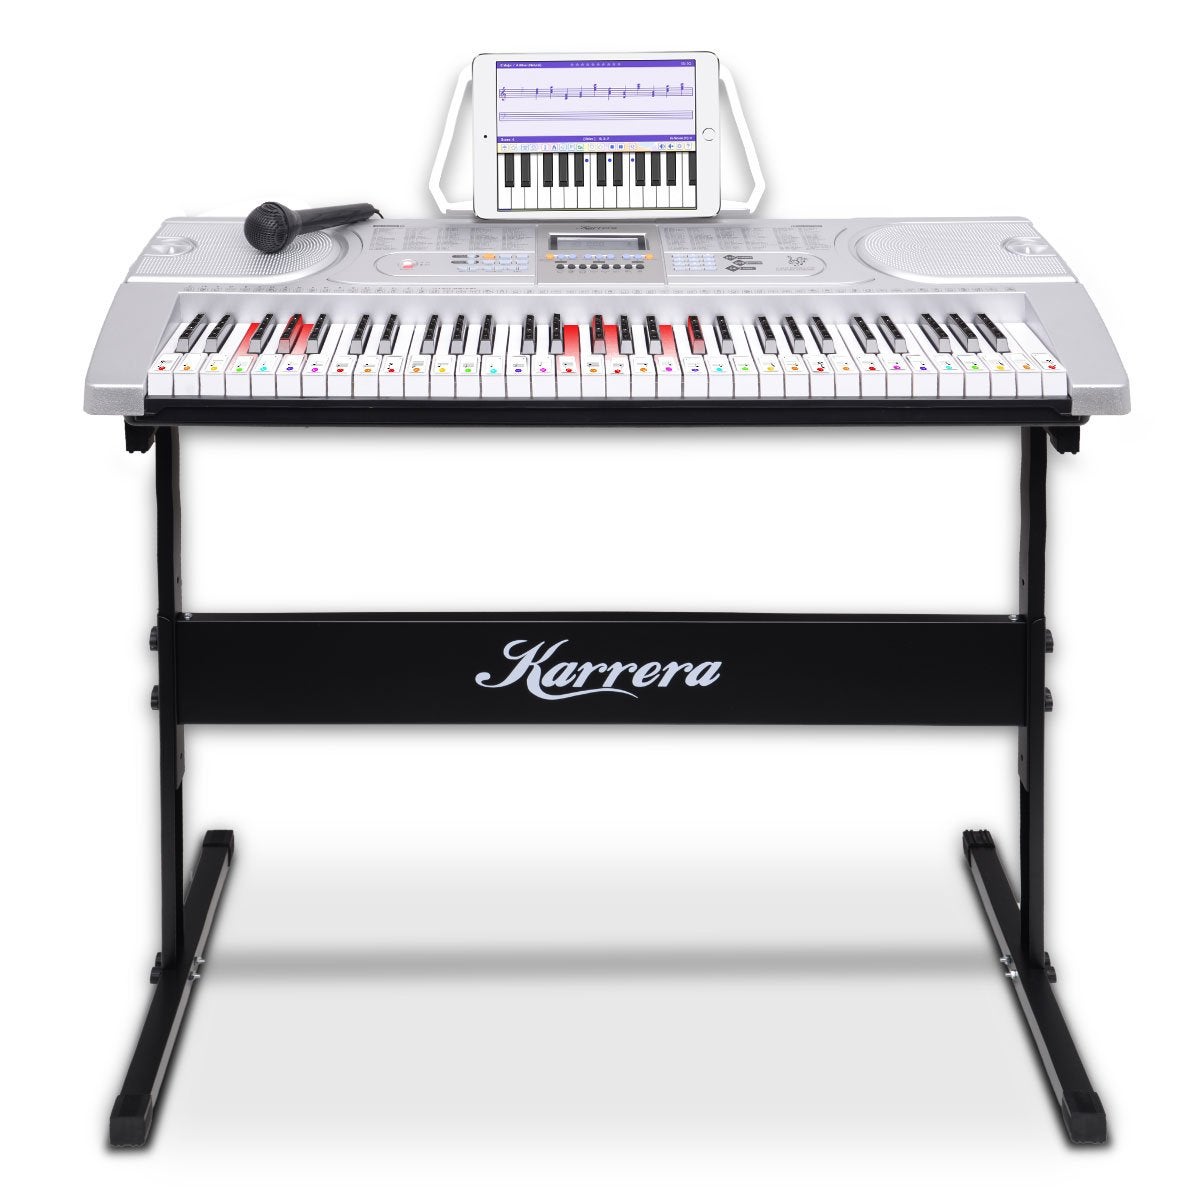 Karrera 61 Keys Electronic LED Keyboard Teaching Piano with Stand - Silver